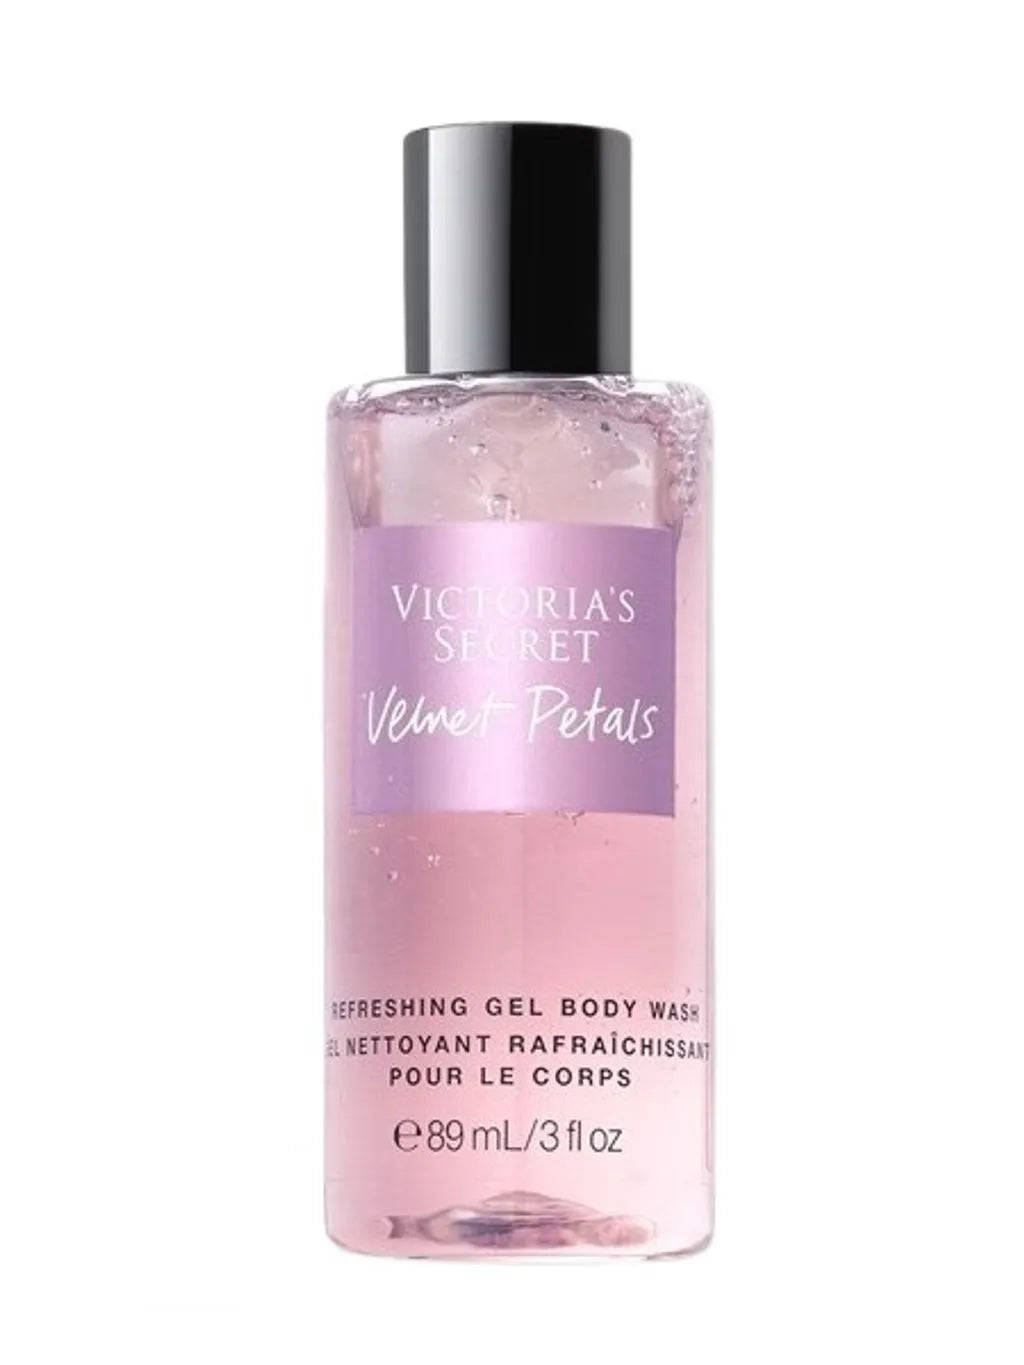 Victoria's Secret Velvet Petals Refreshing Gel Body Wash 89ml